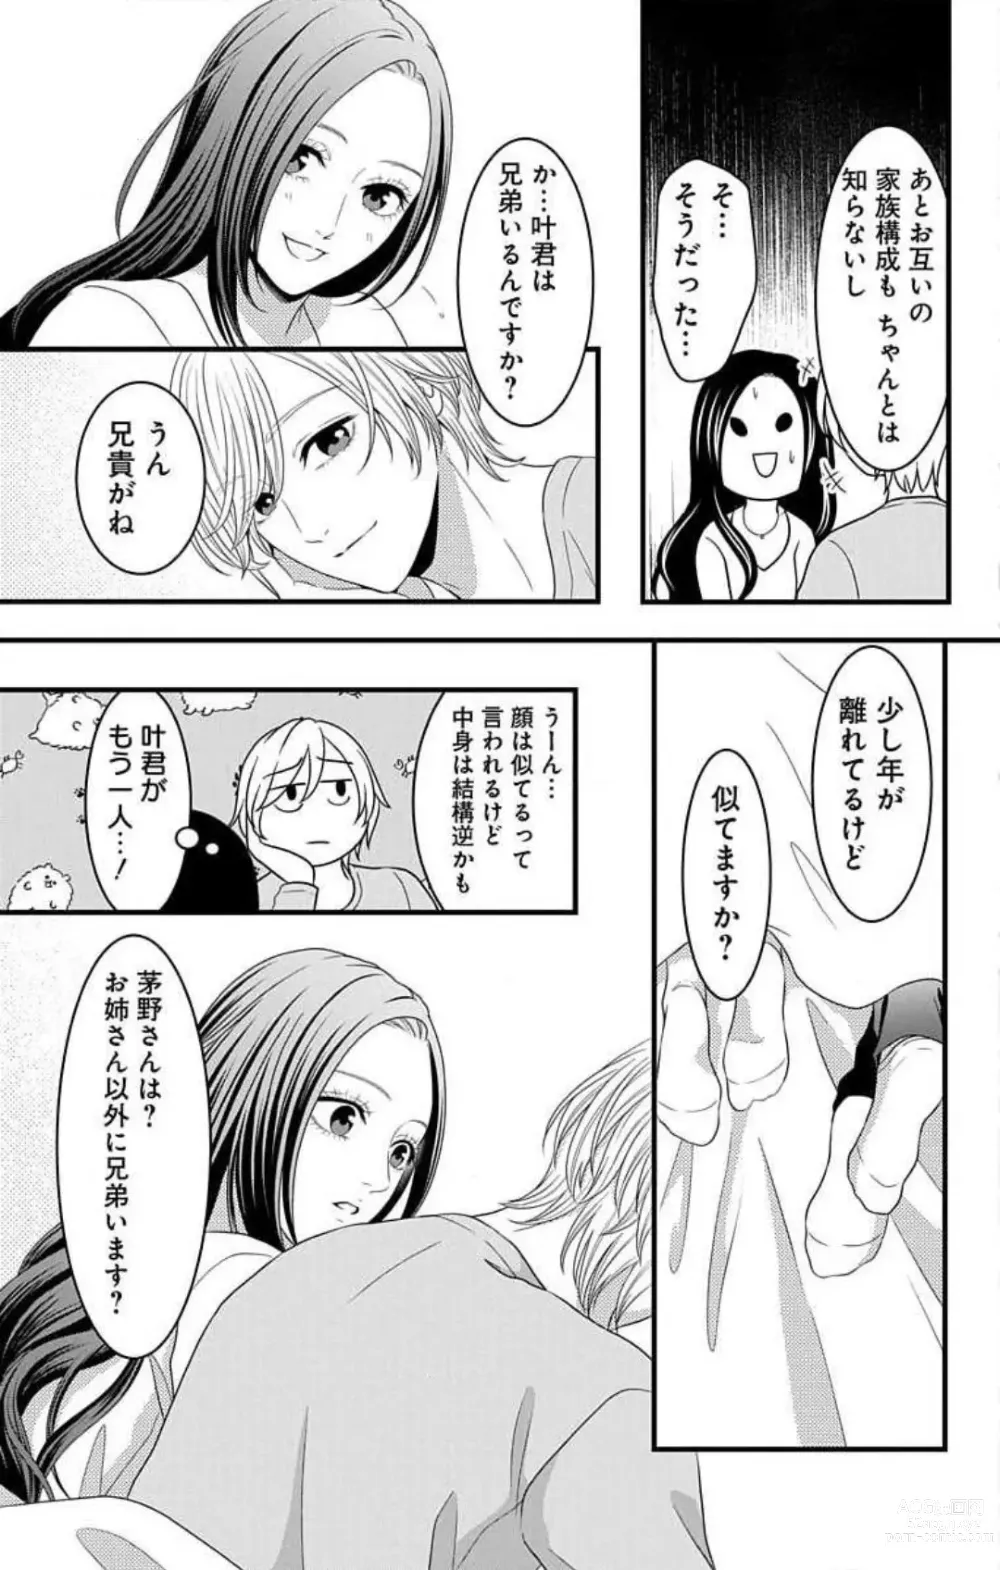 Page 23 of manga Mousou Shoujo 21-27